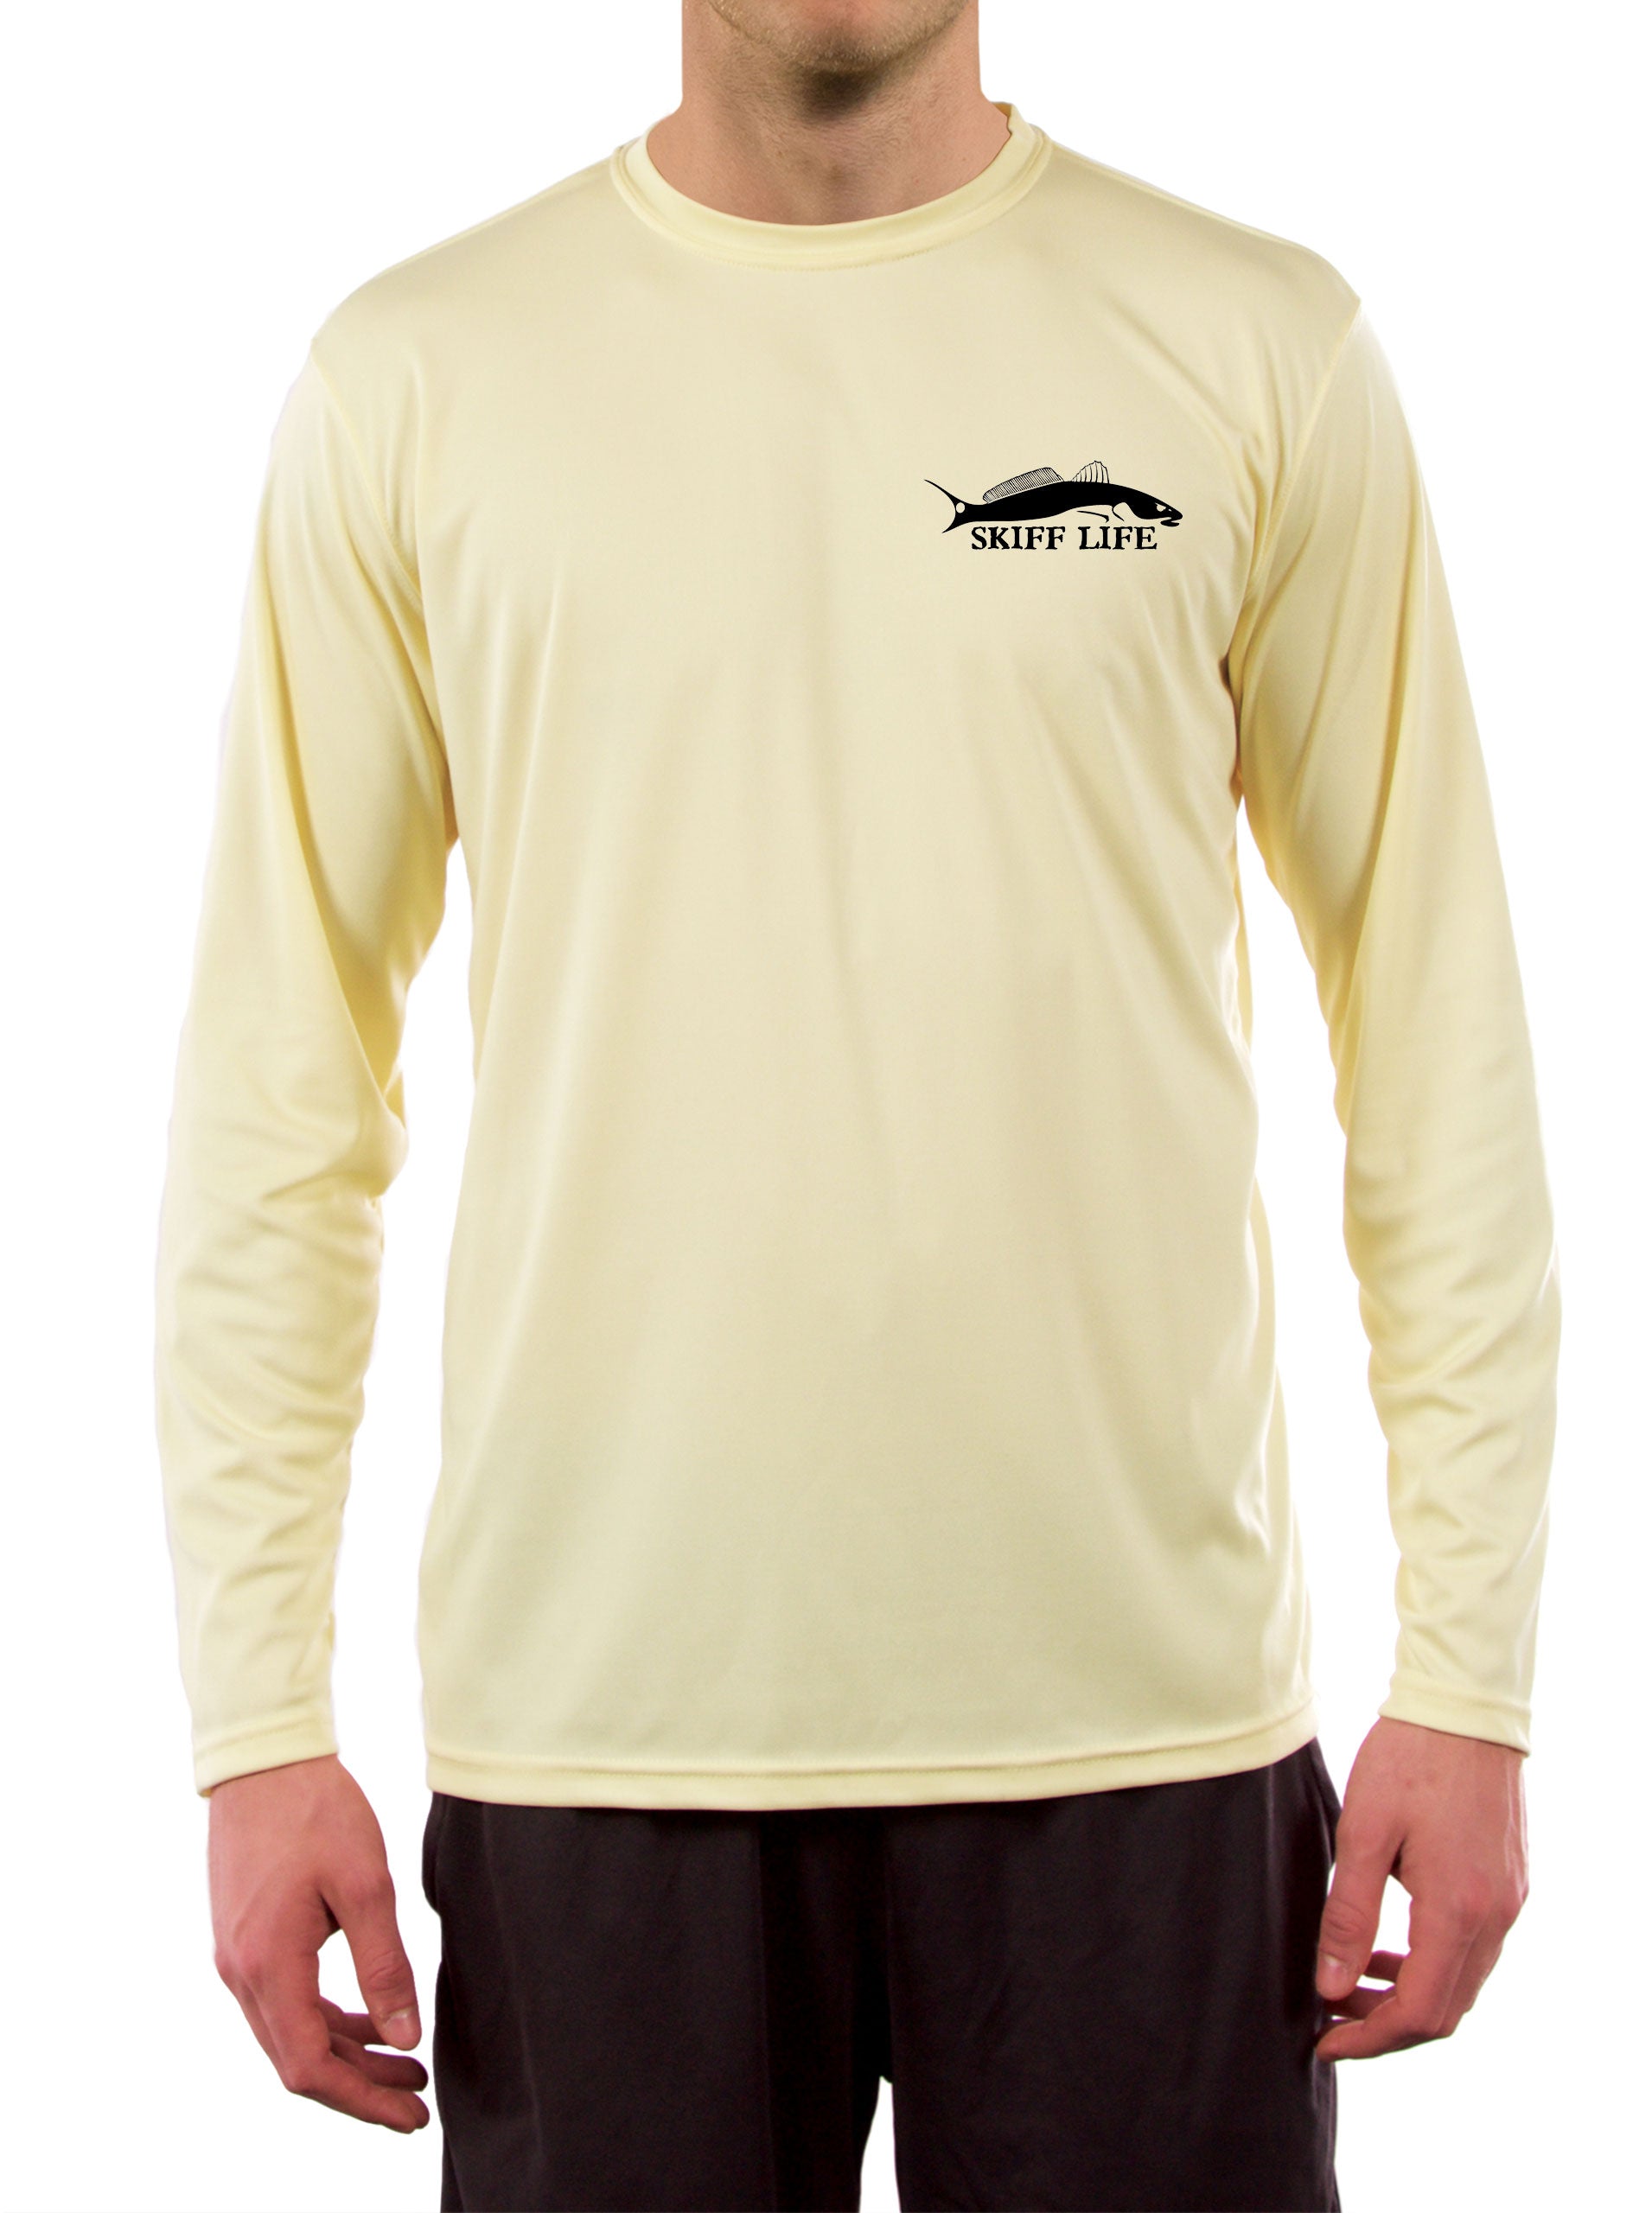 Fishing Shirts Men's Quick Dry Lightweight UPF 50+ Long Sleeve Shirts Rash Guard Swim Shirts Hiking Shirts Moisture Wicking 4XL / Yellow